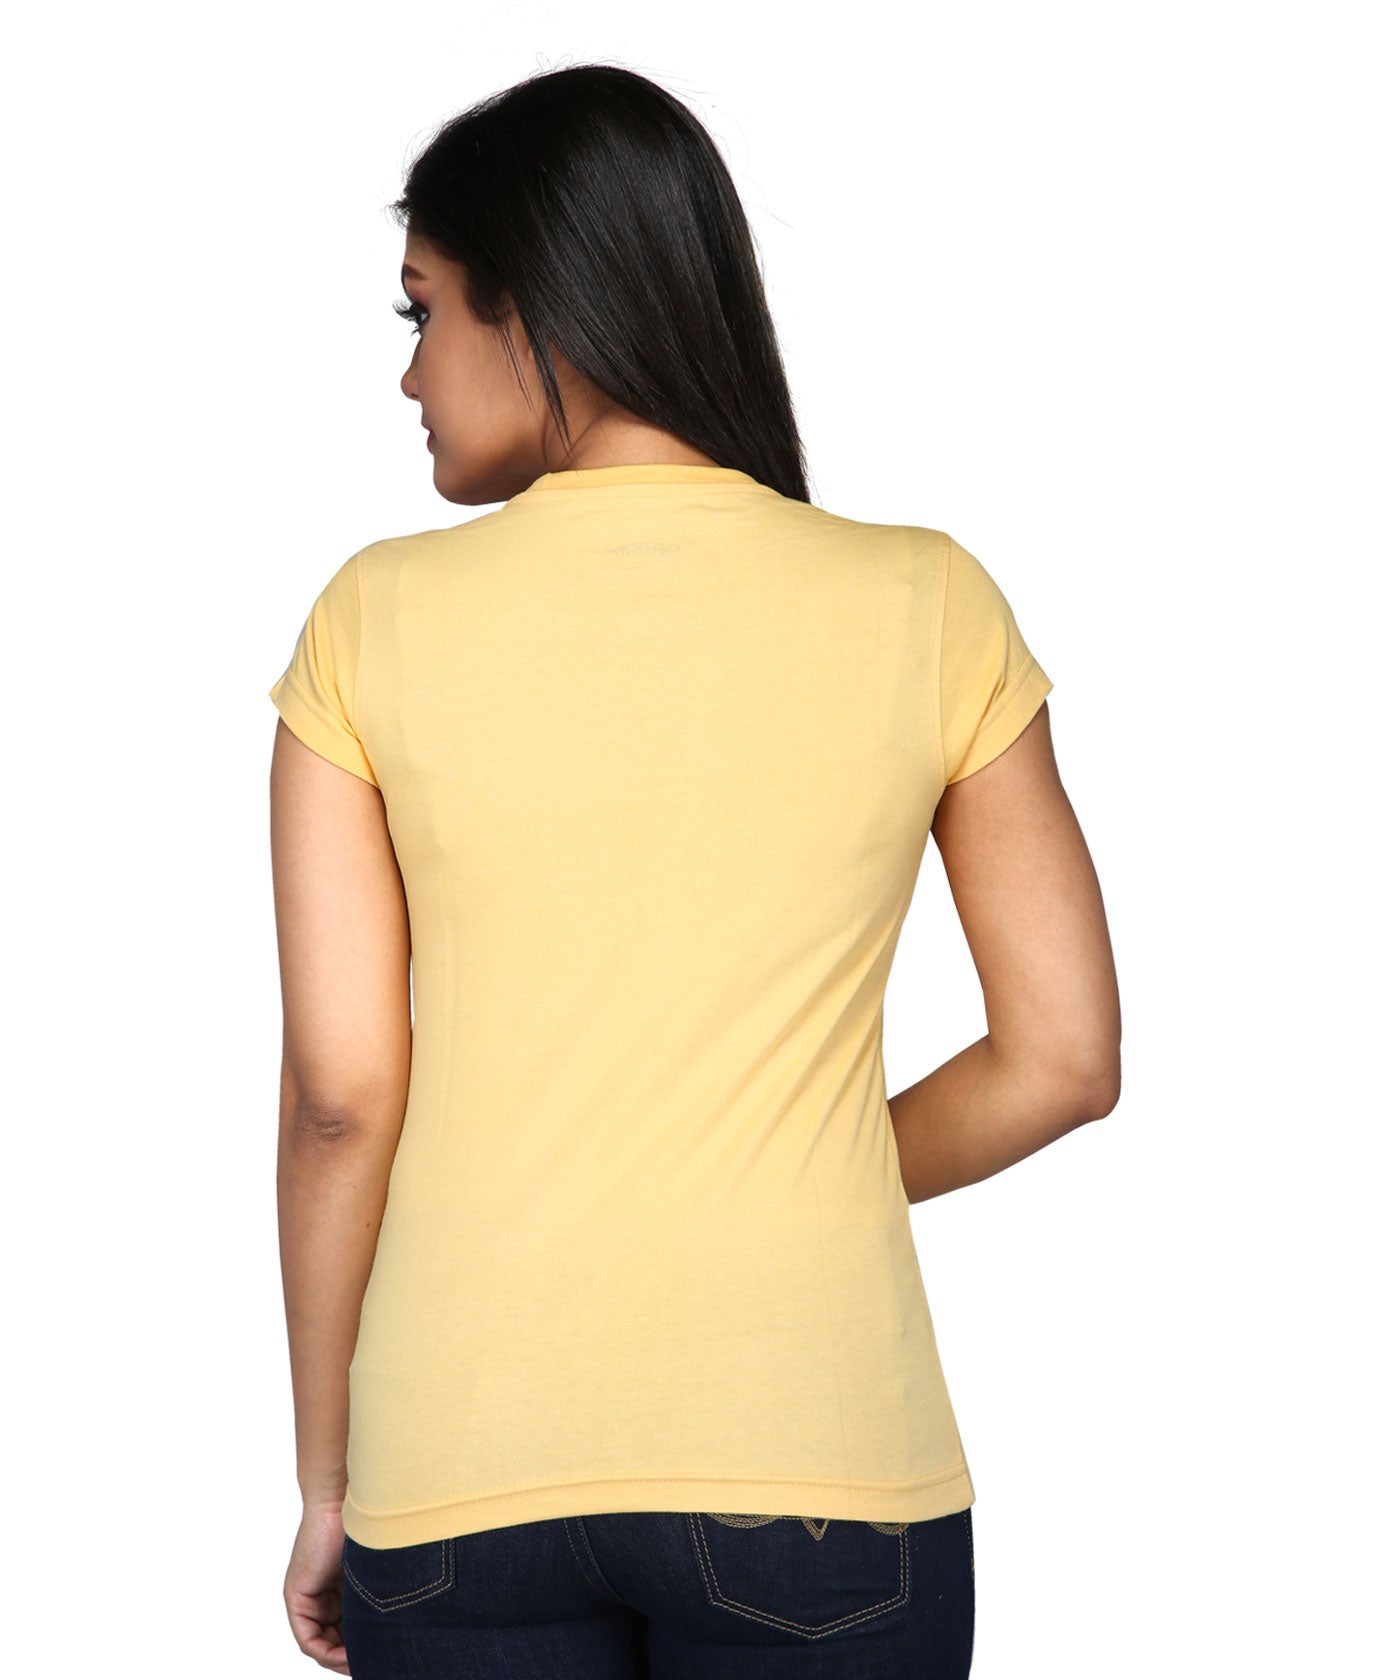 Premium Plain 100% Cotton Tees For Women - Golden Yellow